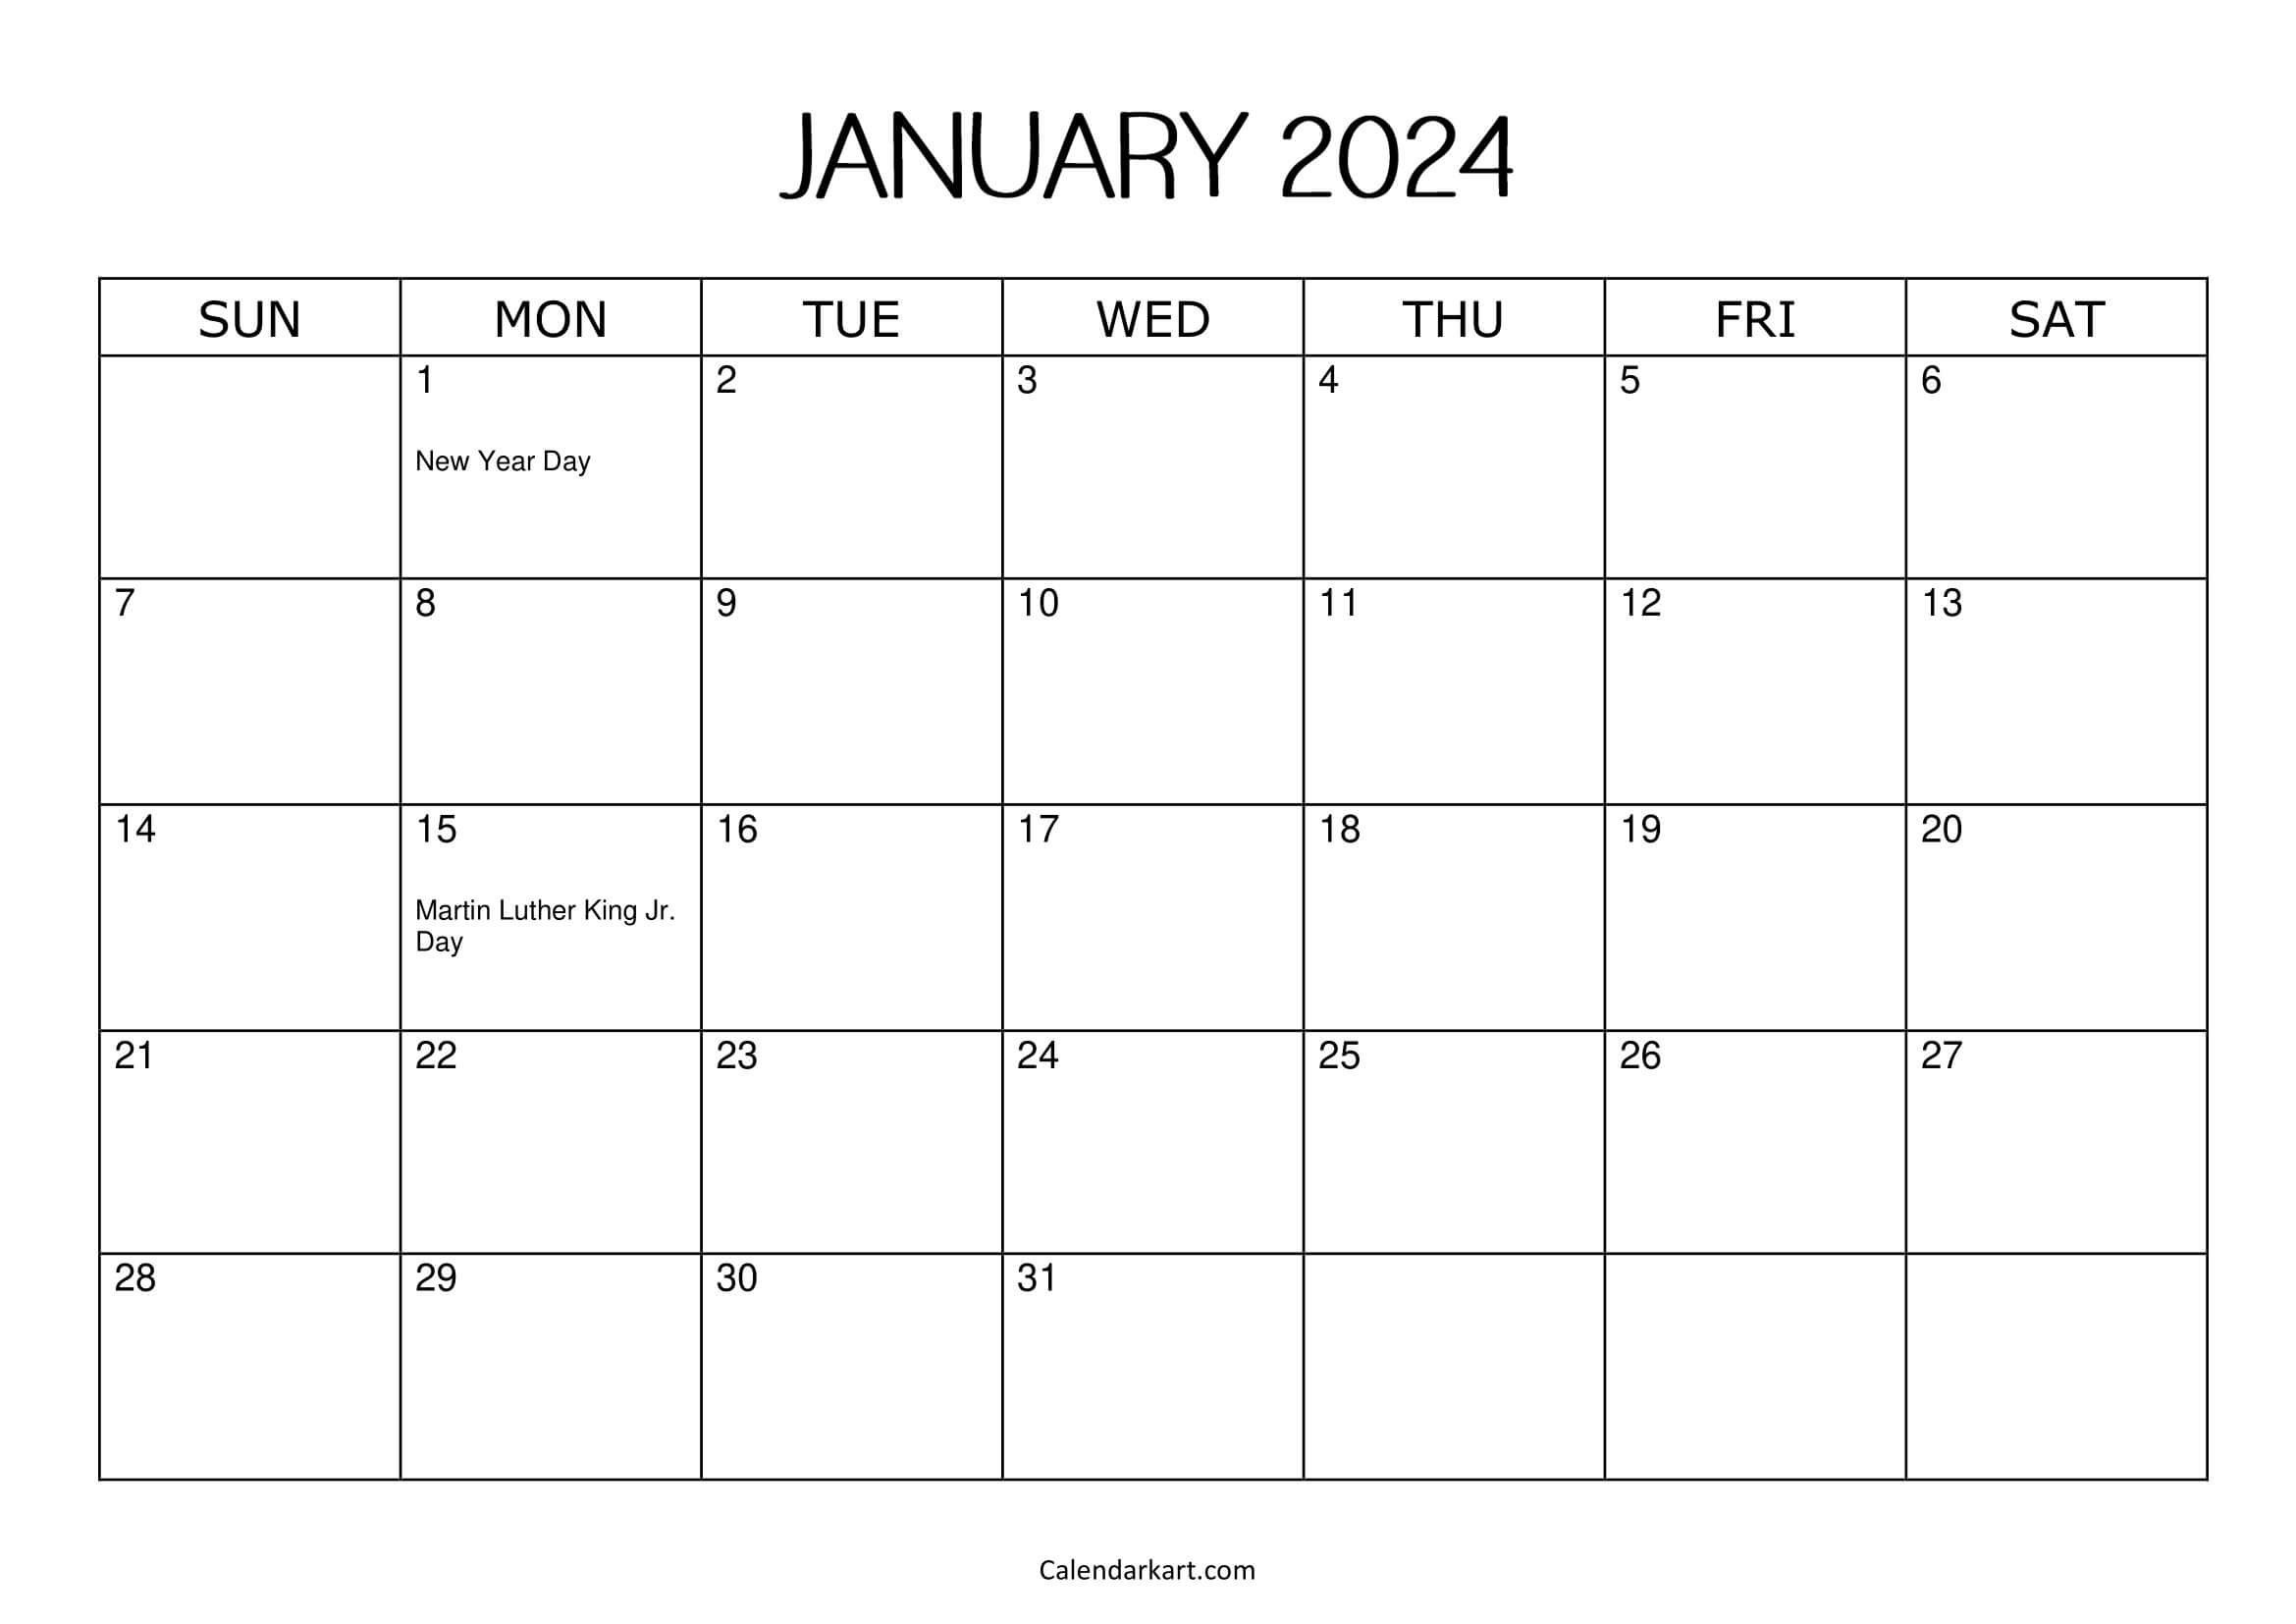 Free Printable January 2024 Calendars - Calendarkart | Printable Calendar 2024 Monthly With Holidays